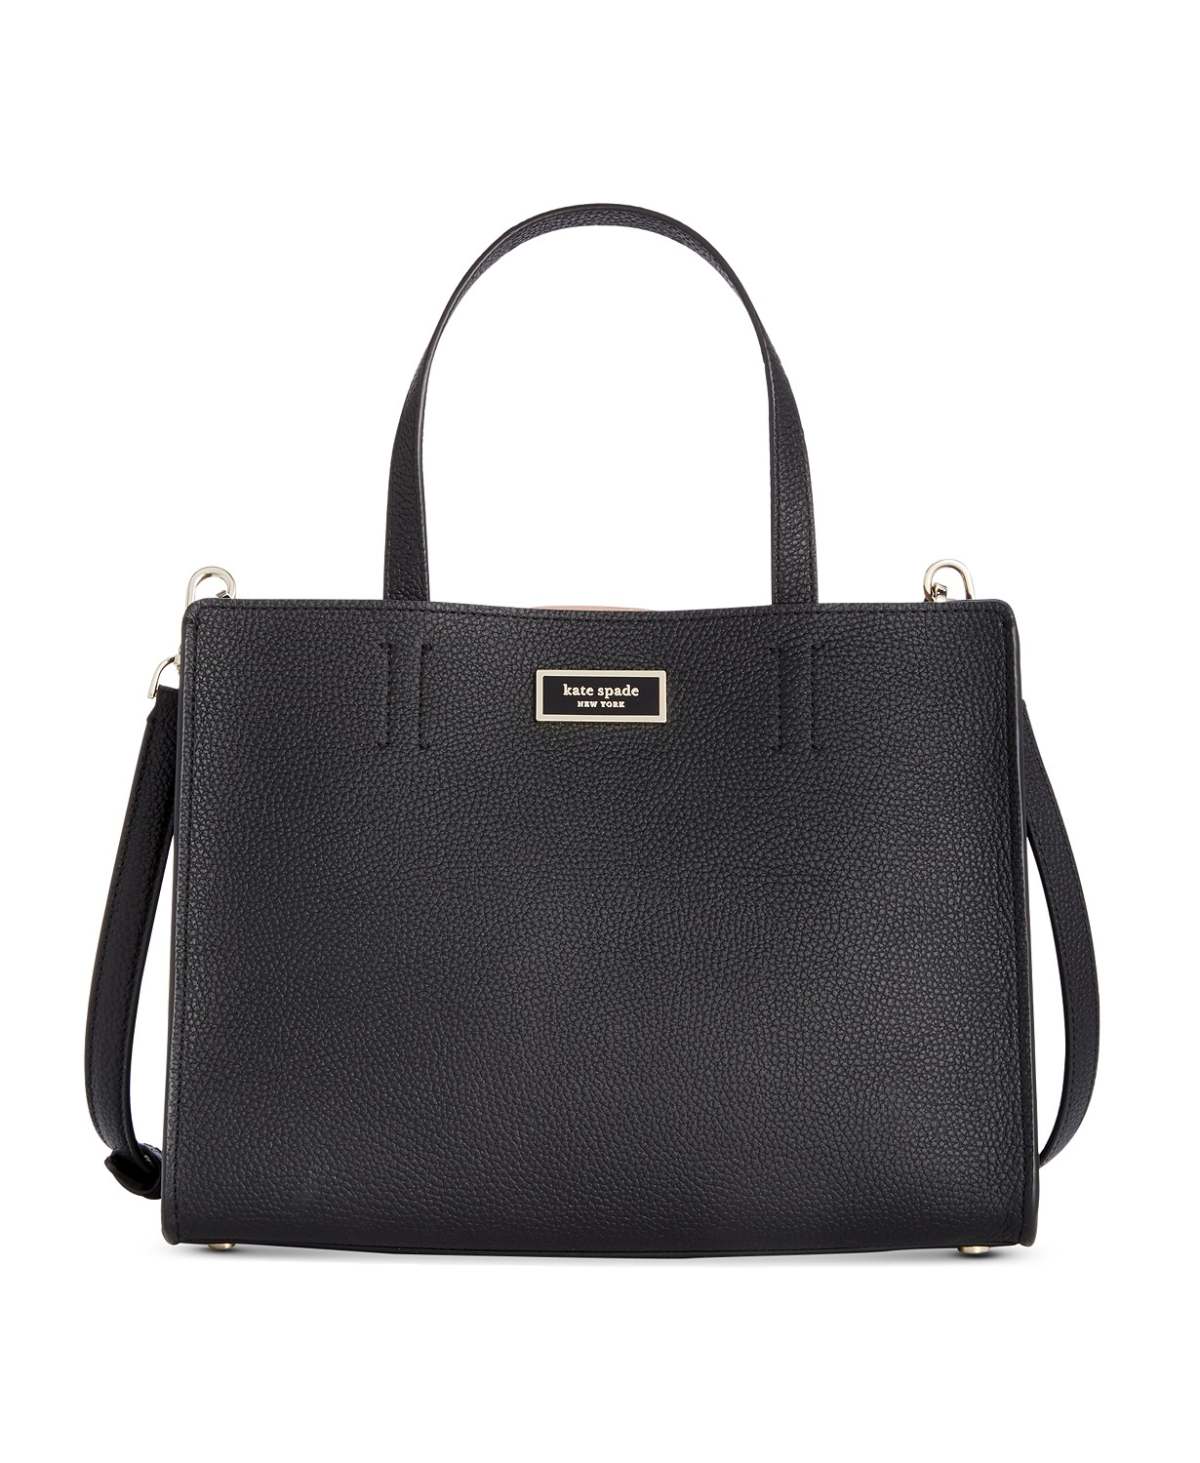 Kate Spade's Sam bag: A look at her iconic handbag - ABC11 Raleigh-Durham